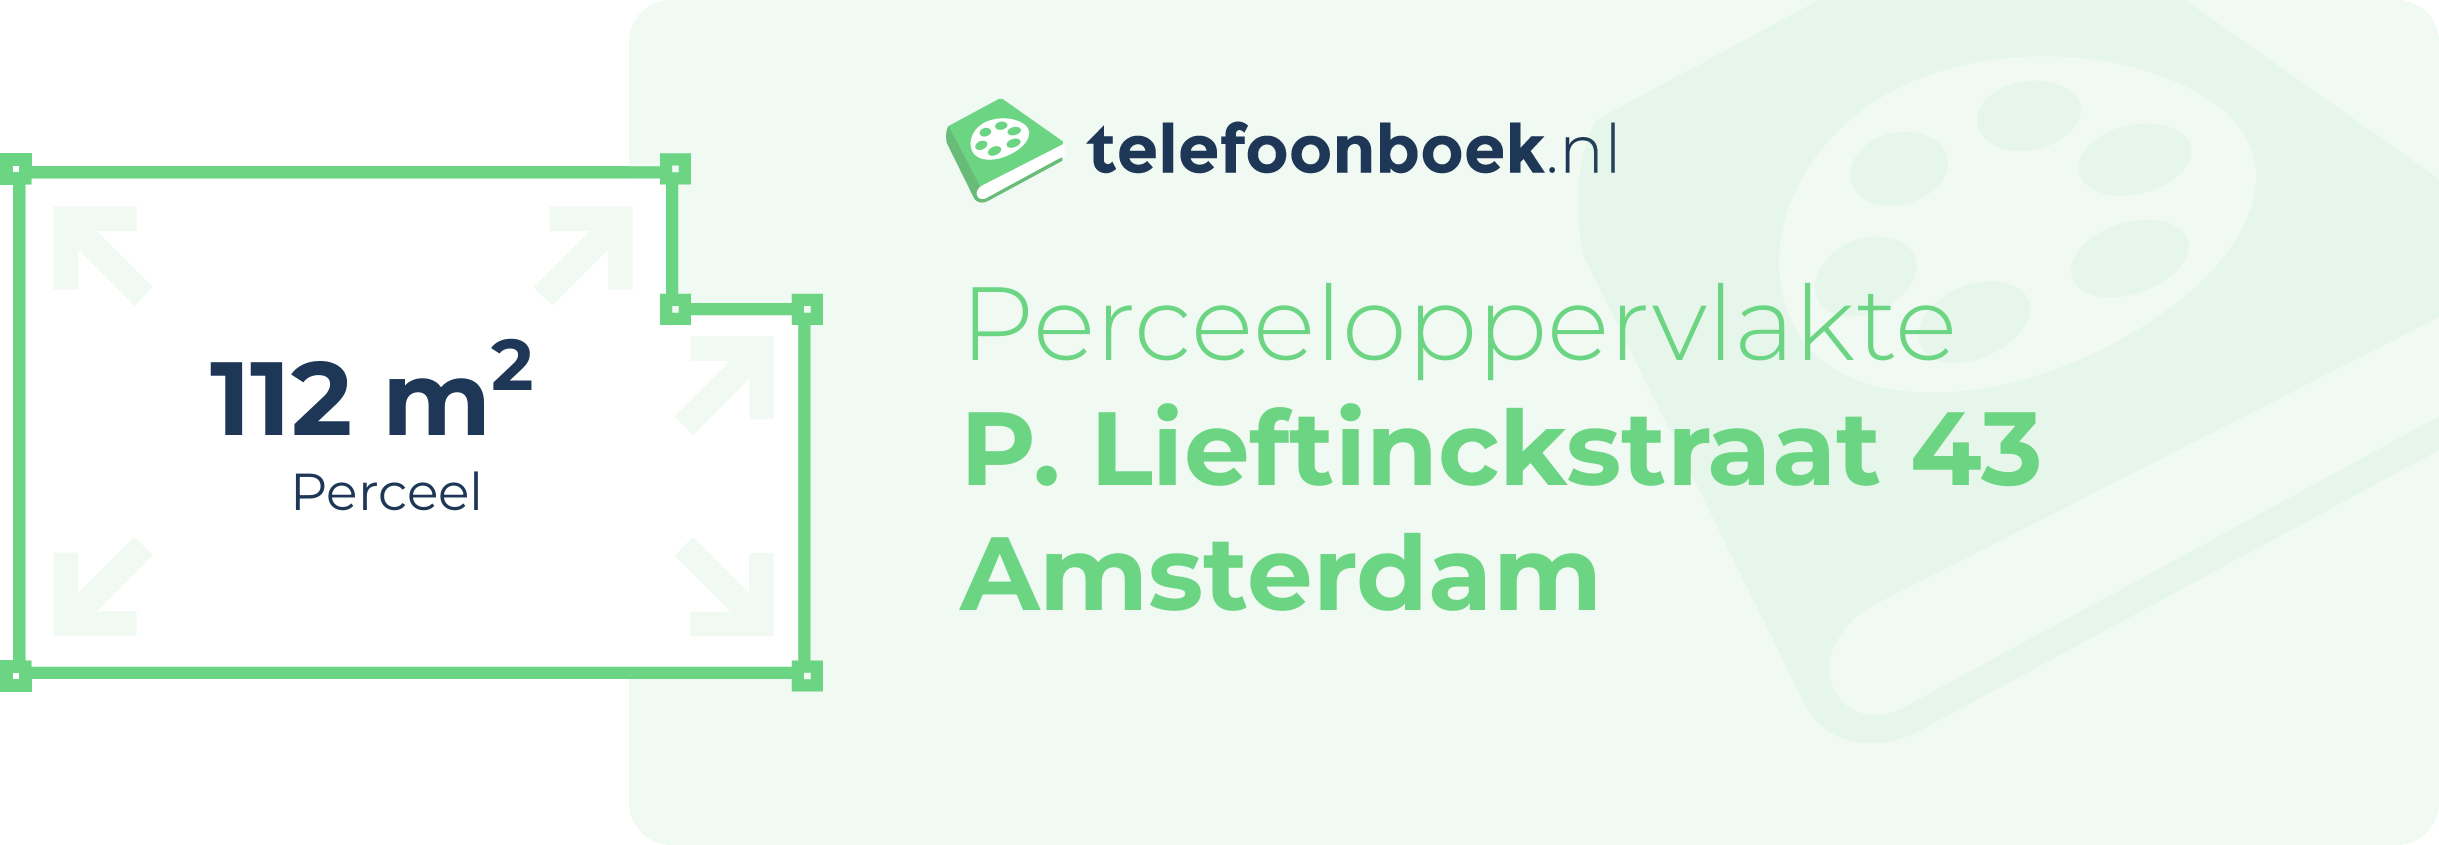 Perceeloppervlakte P. Lieftinckstraat 43 Amsterdam